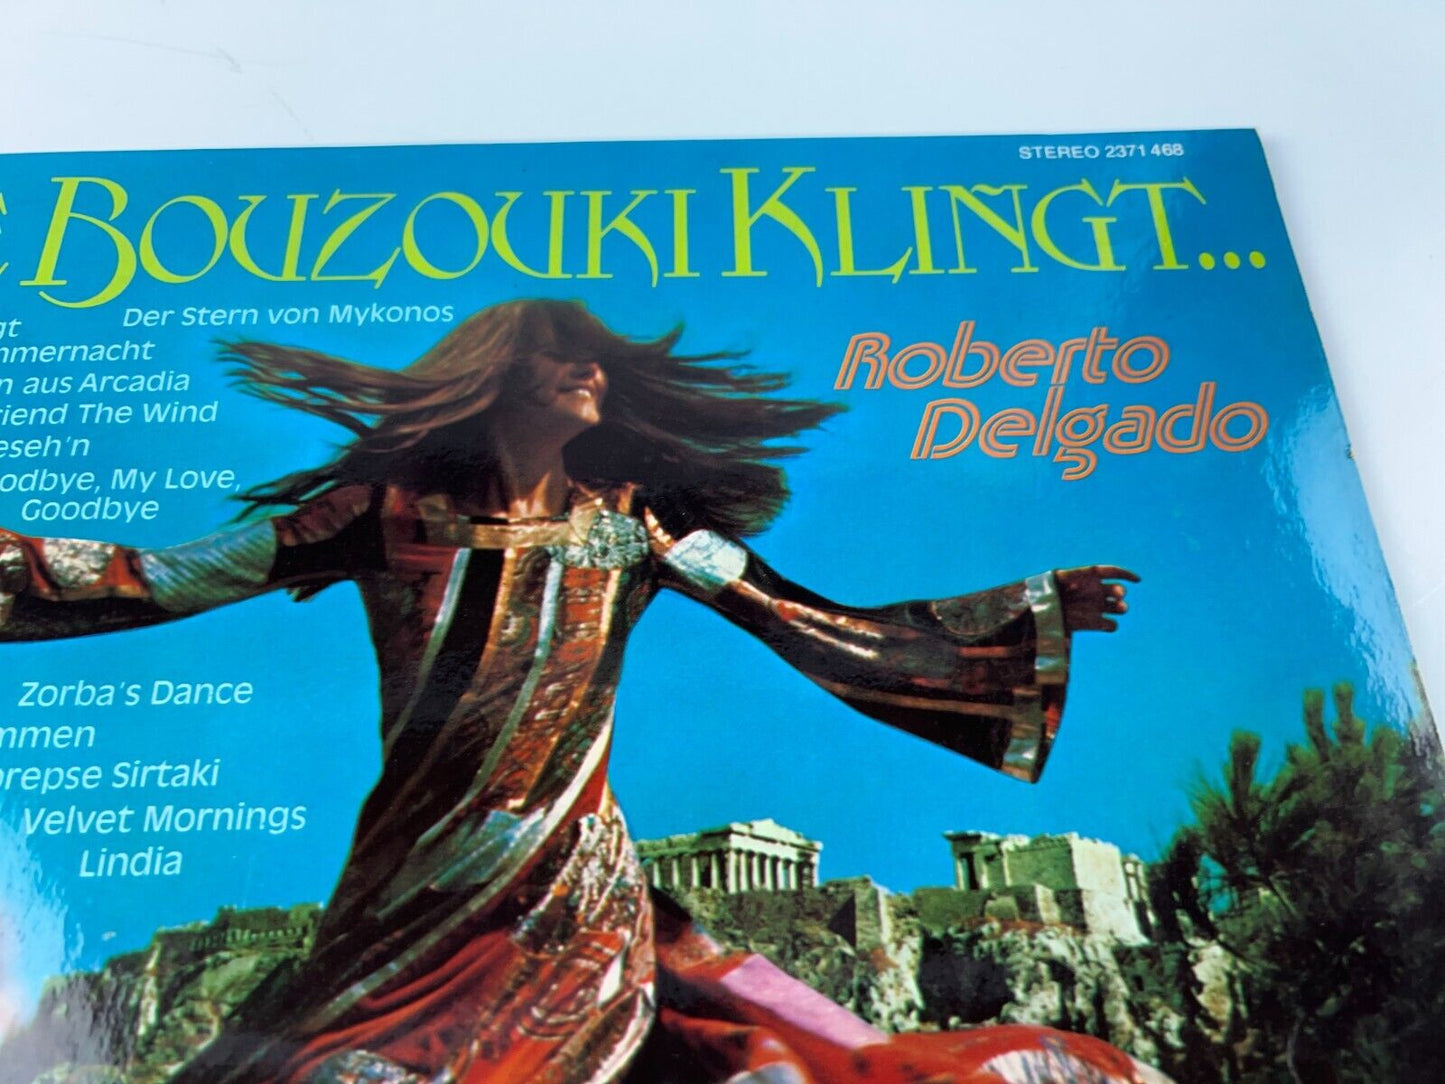 Roberto Delgado - Die Bouzouki Klingt ... - Used Vinyl Record - VG